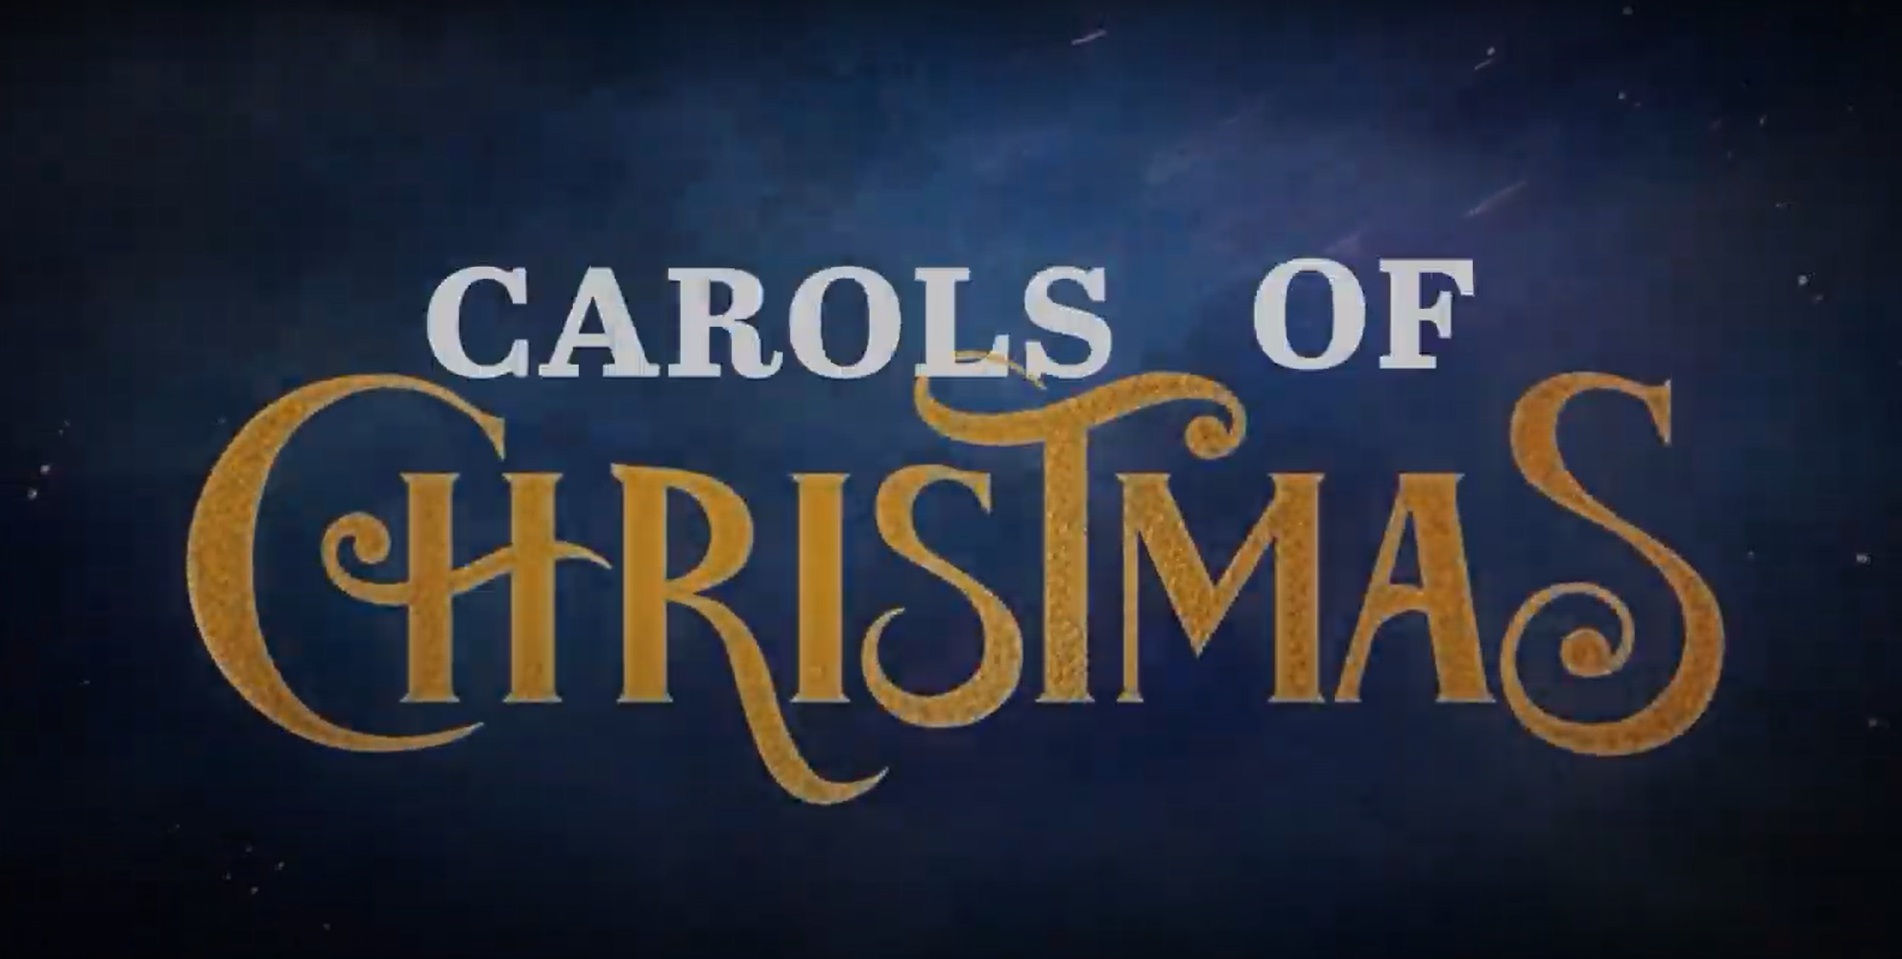 Carols of Christmas Wk 1